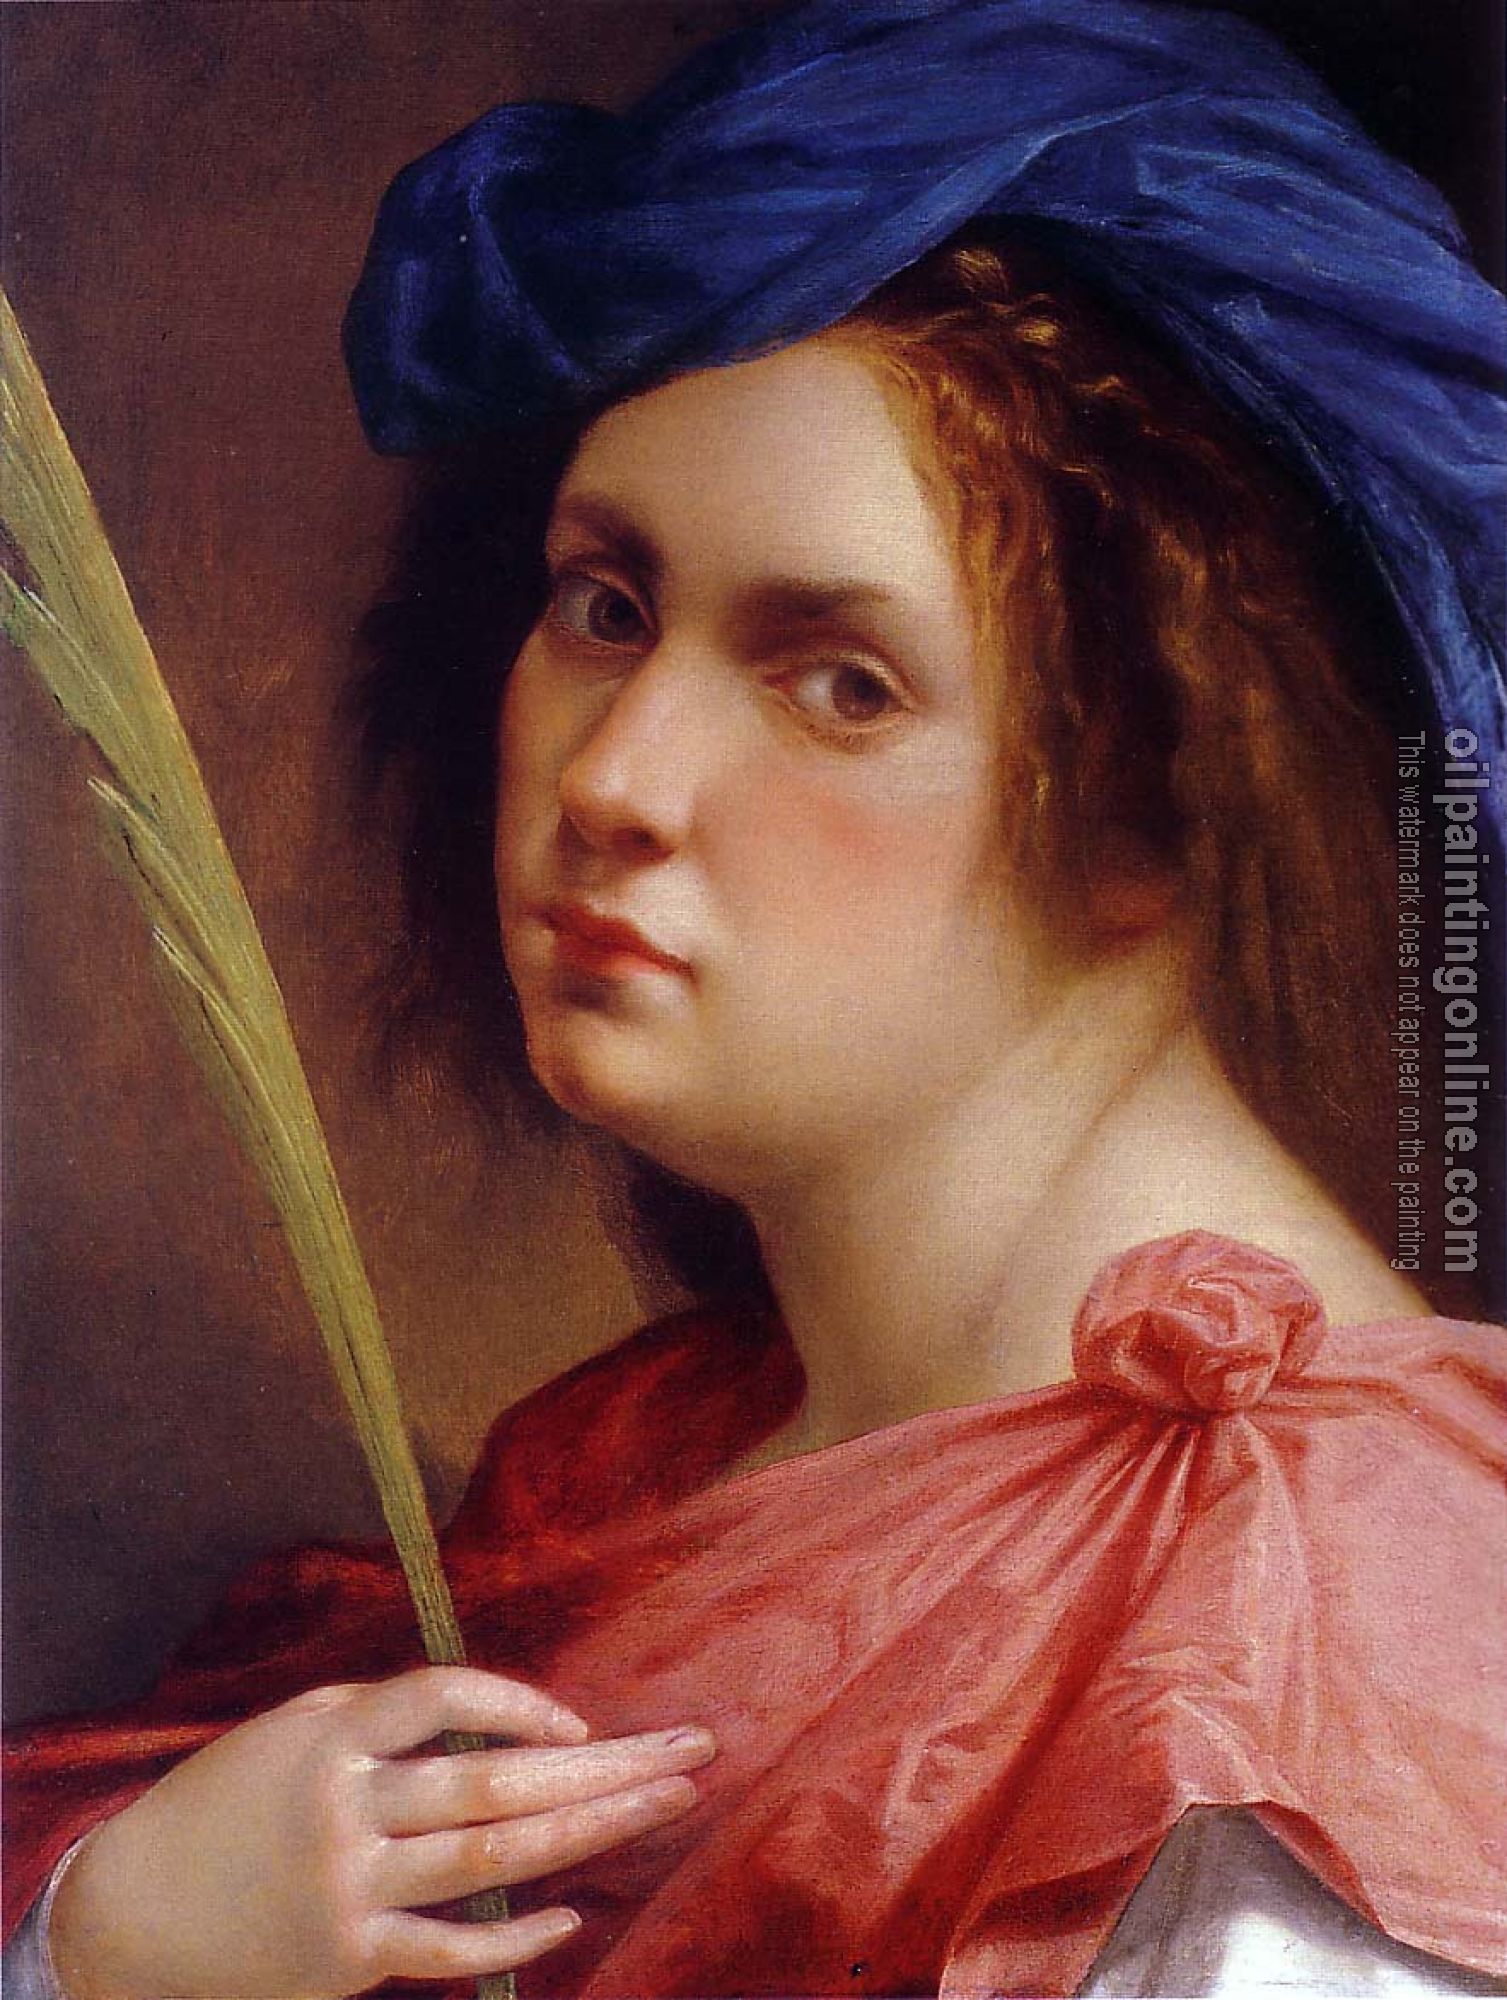 Gentileschi, Artemisia - Self-Portrait as a Female Martyr